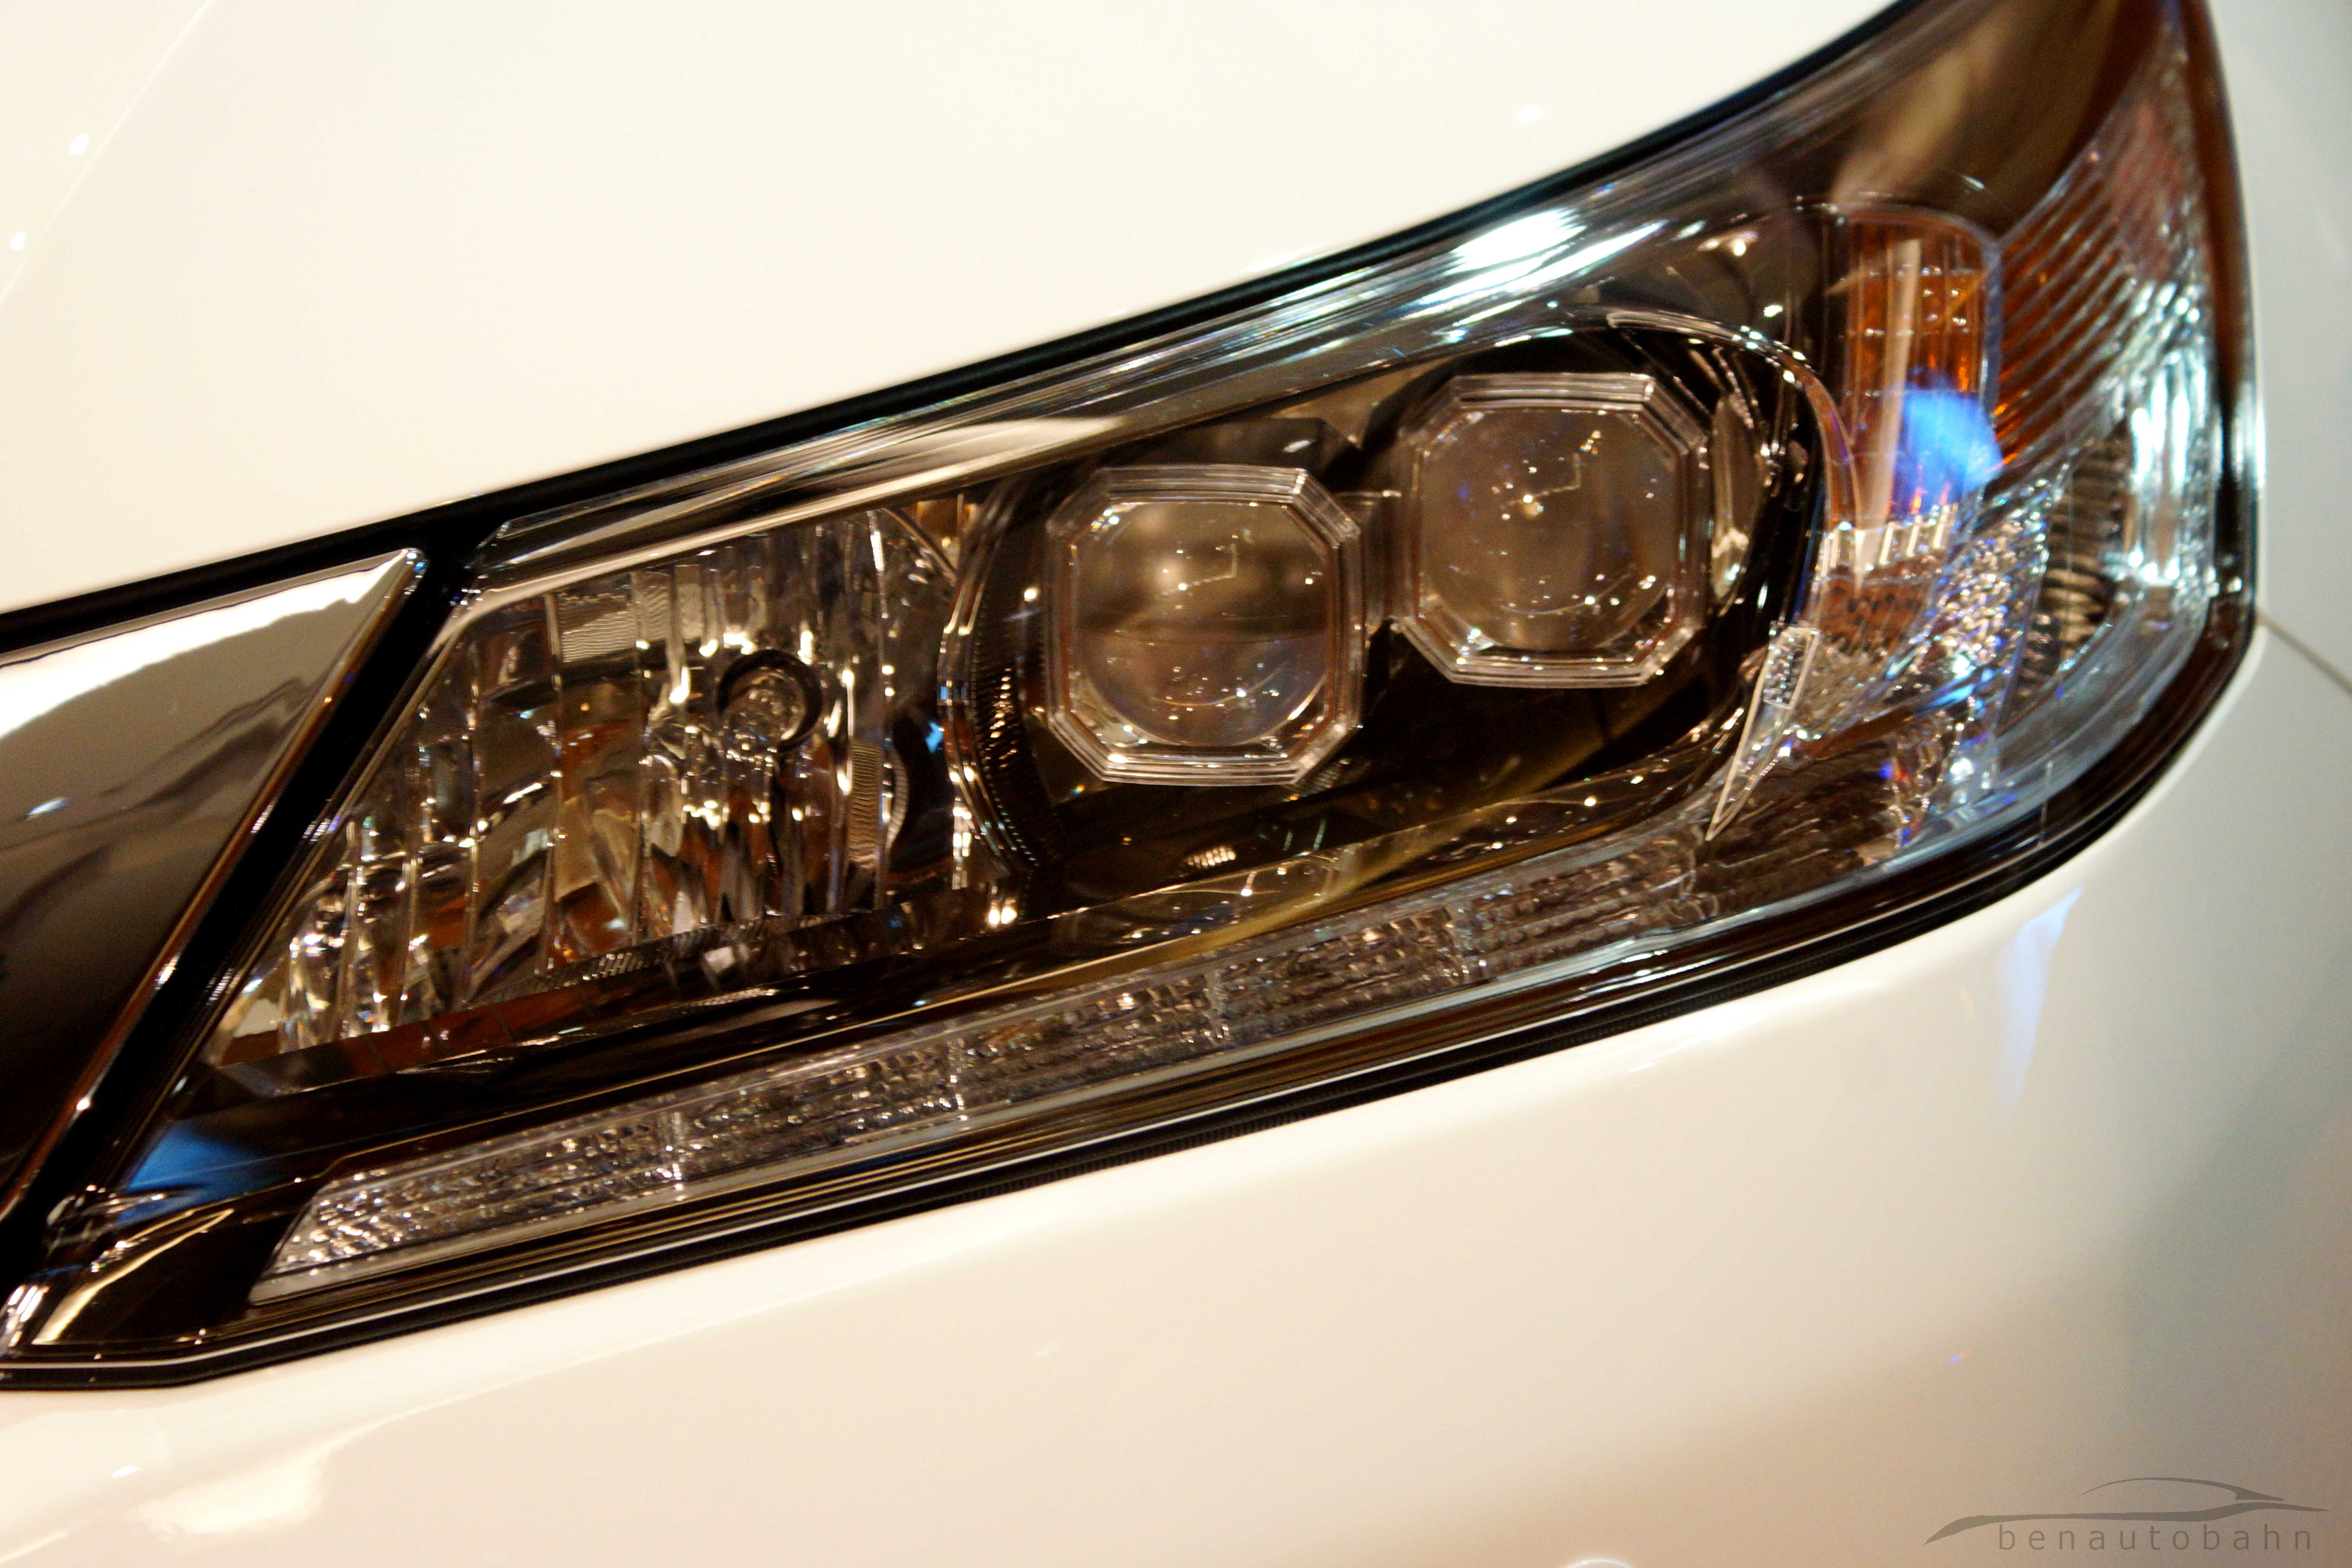 LED headlights reserved for the 2.4 liter 